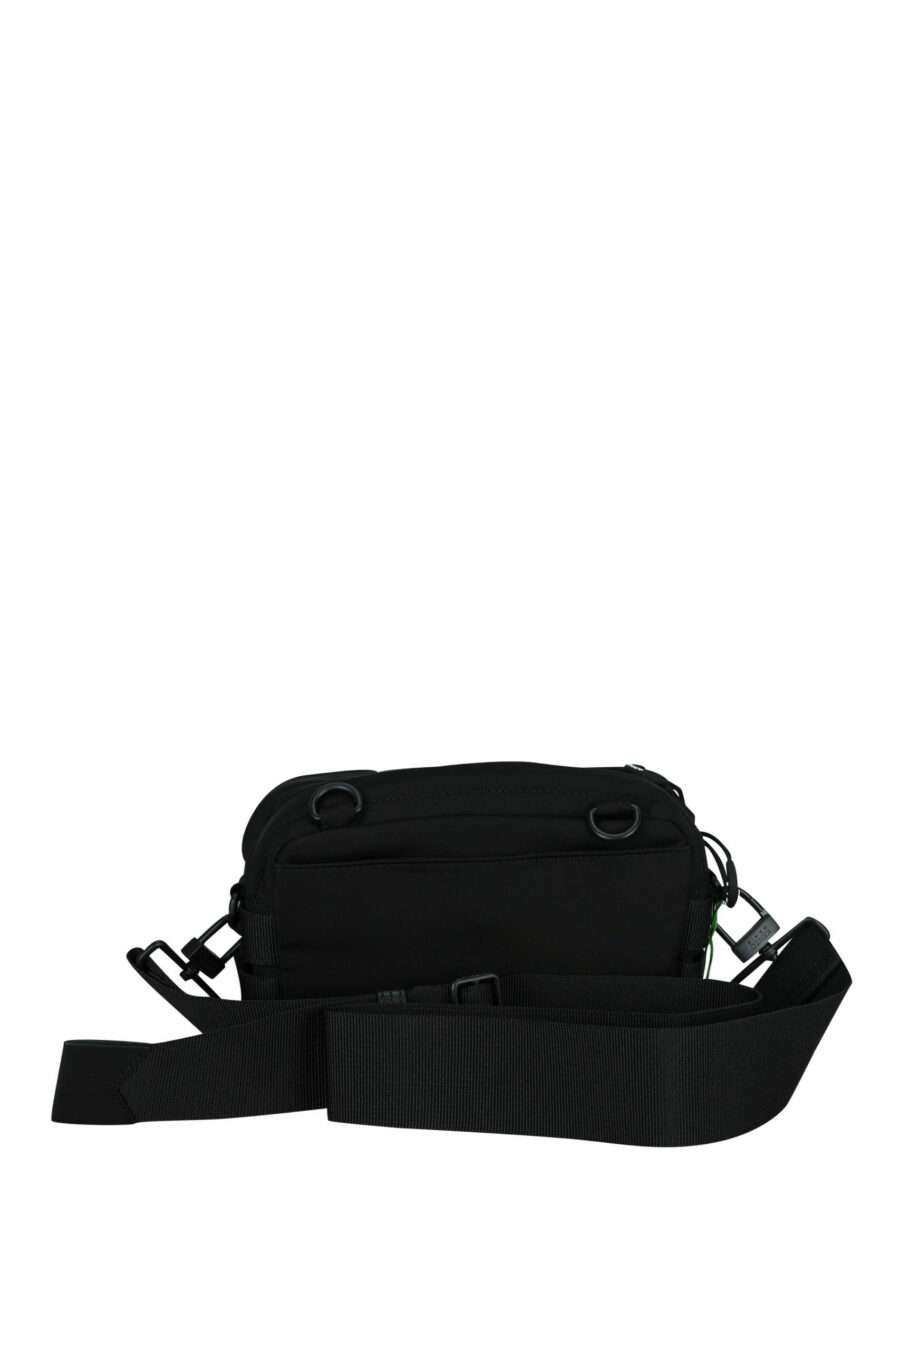 Black crossbody bag with "kenzo jungle" logo - 3612230603738 2 scaled